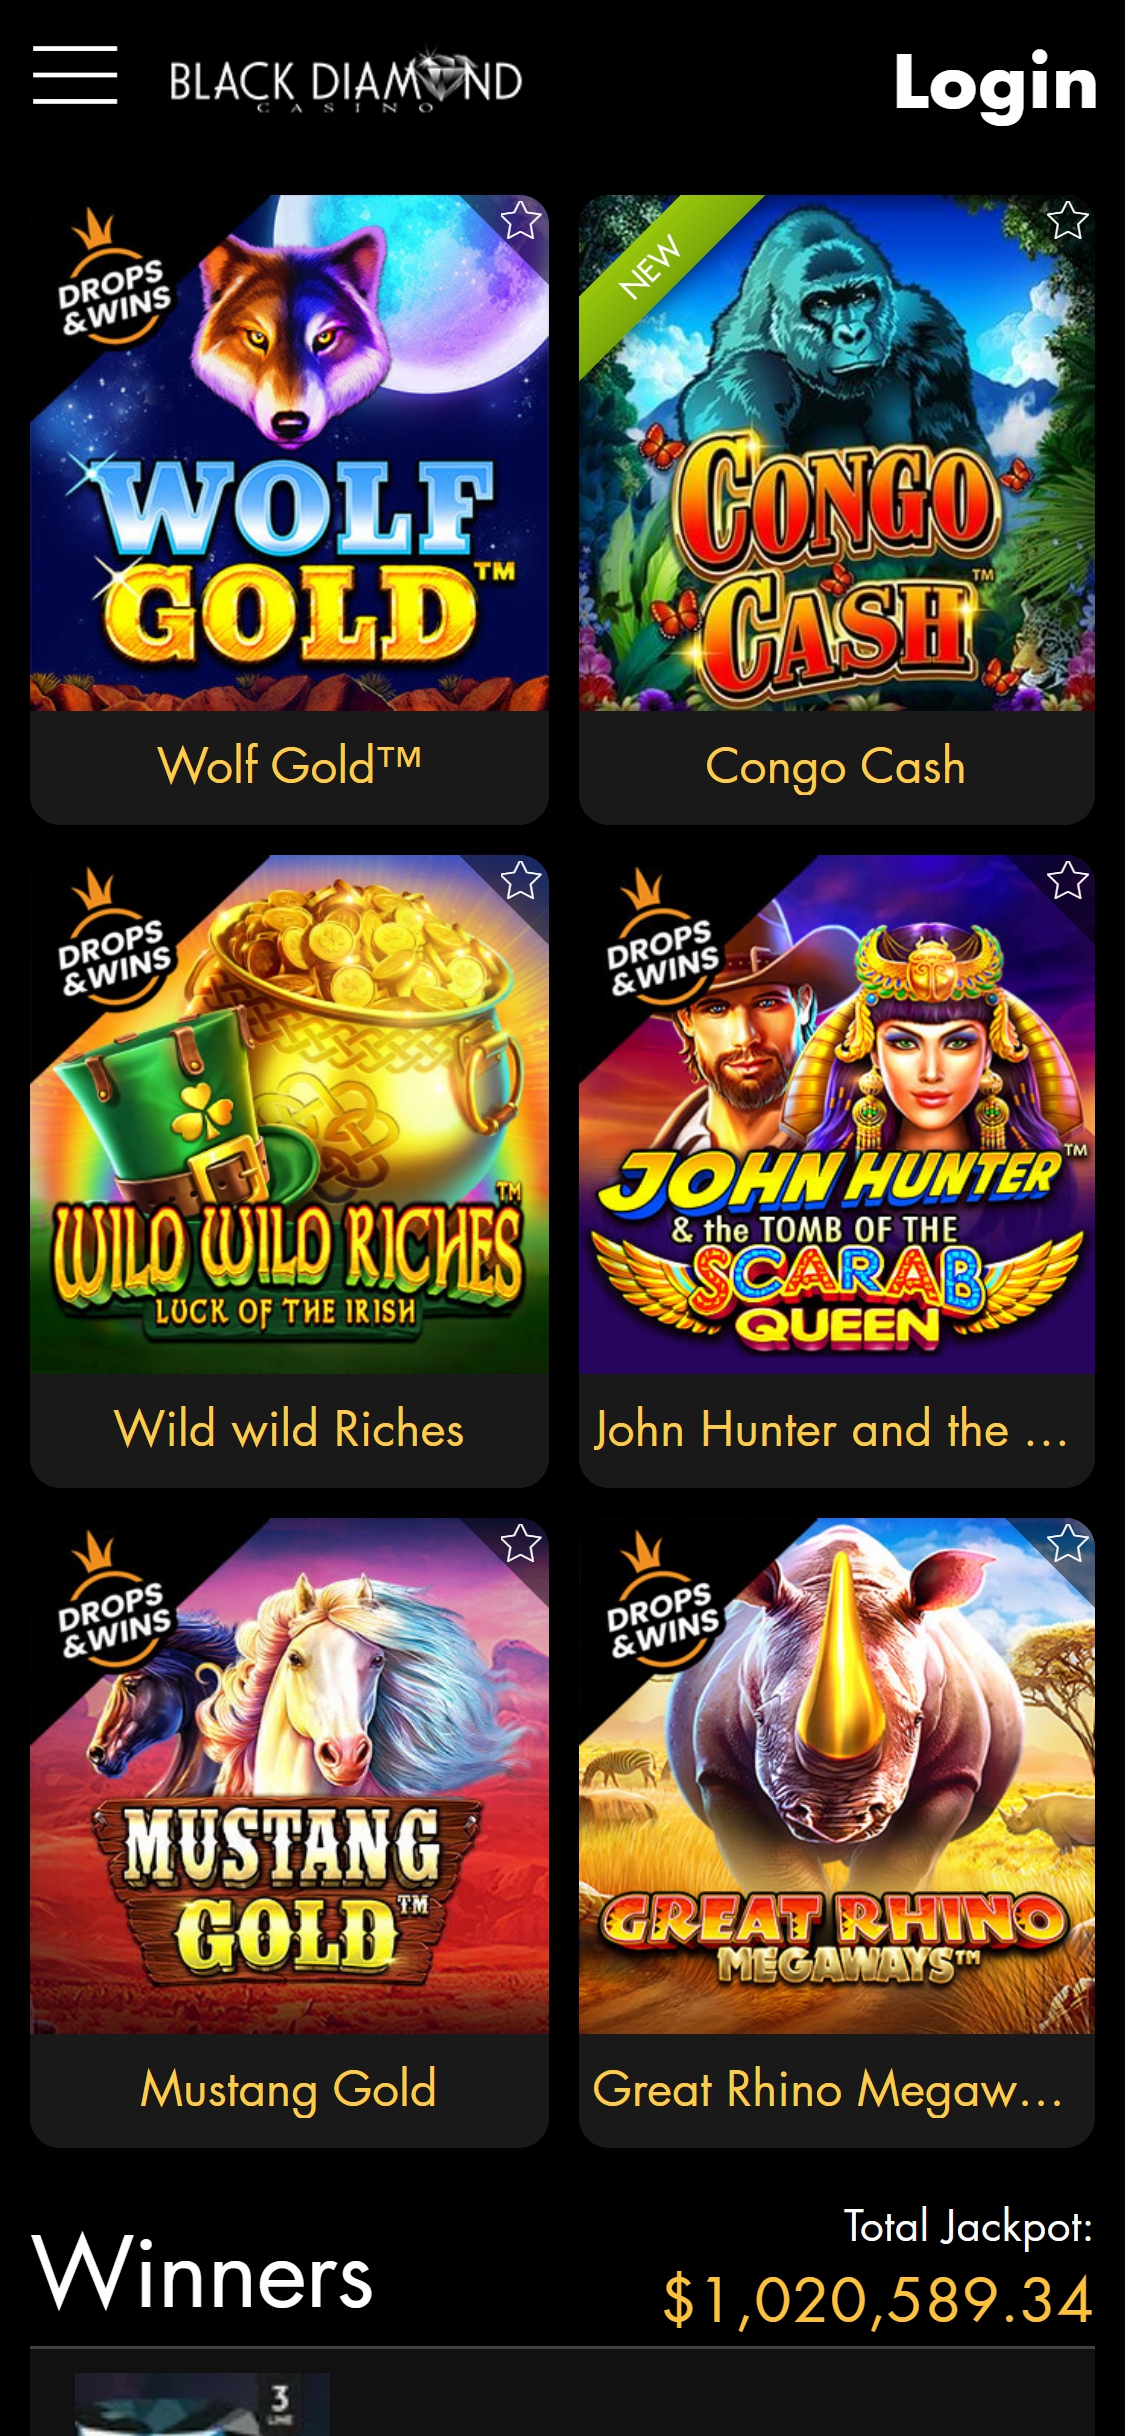 Black Diamond Casino Mobile Games Review